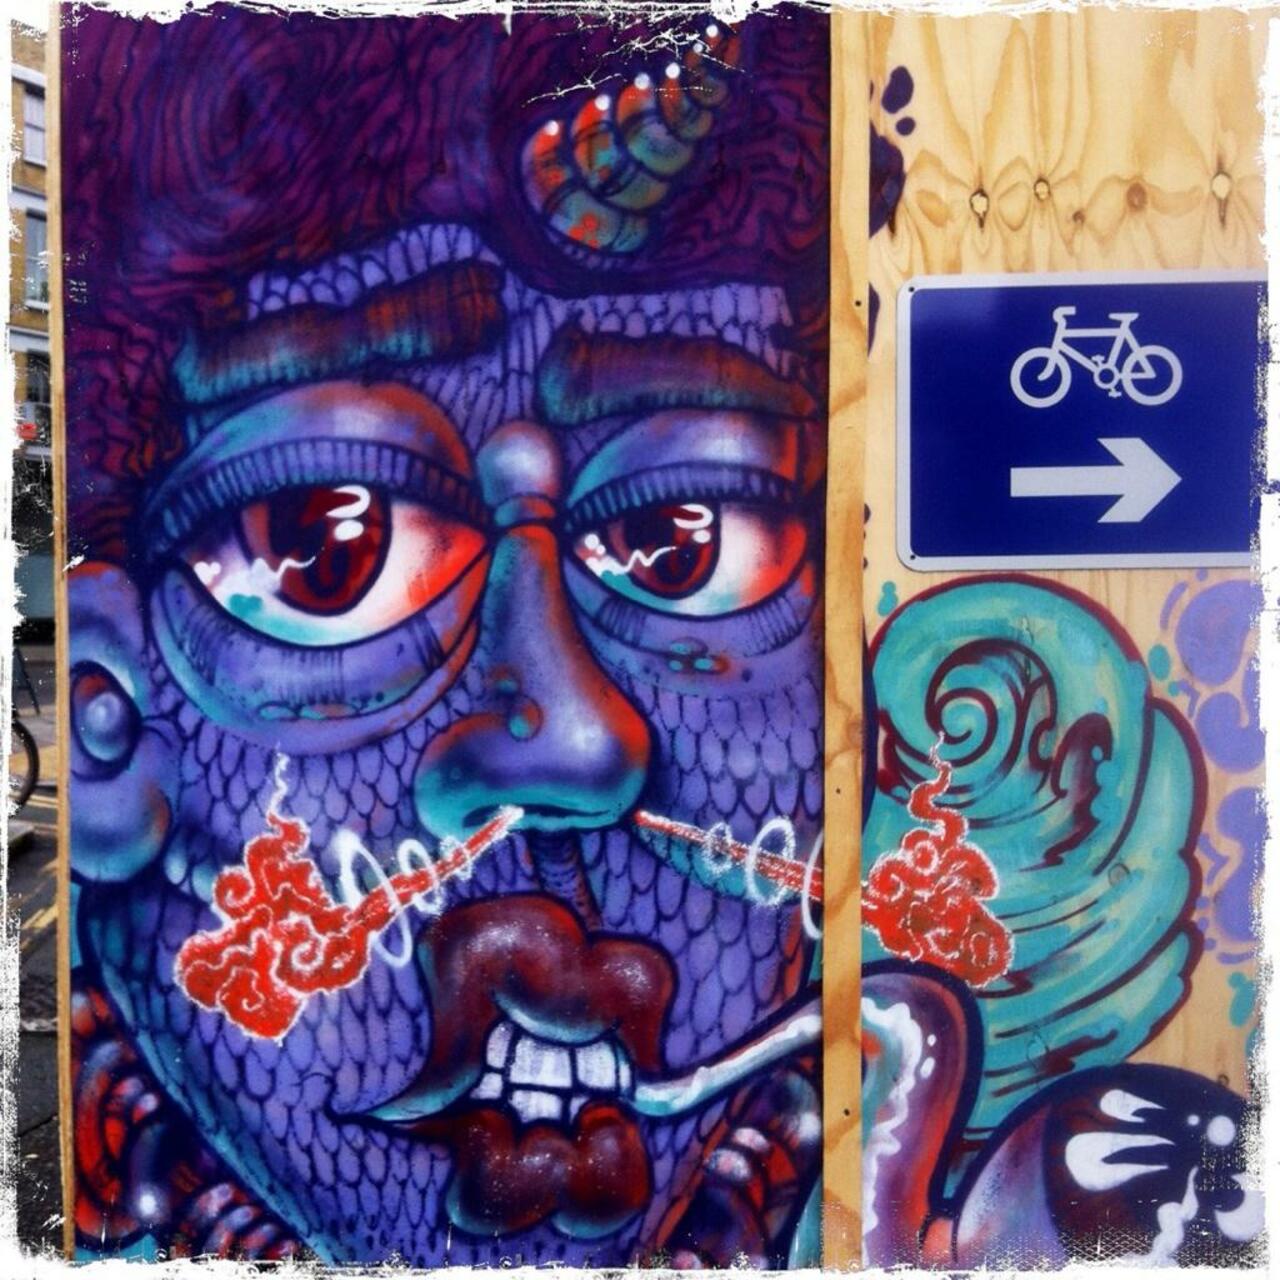 Another piece by #Flesh on the Ravey Street hoardings #graffiti #streetart #art http://t.co/O2crMlzWeA